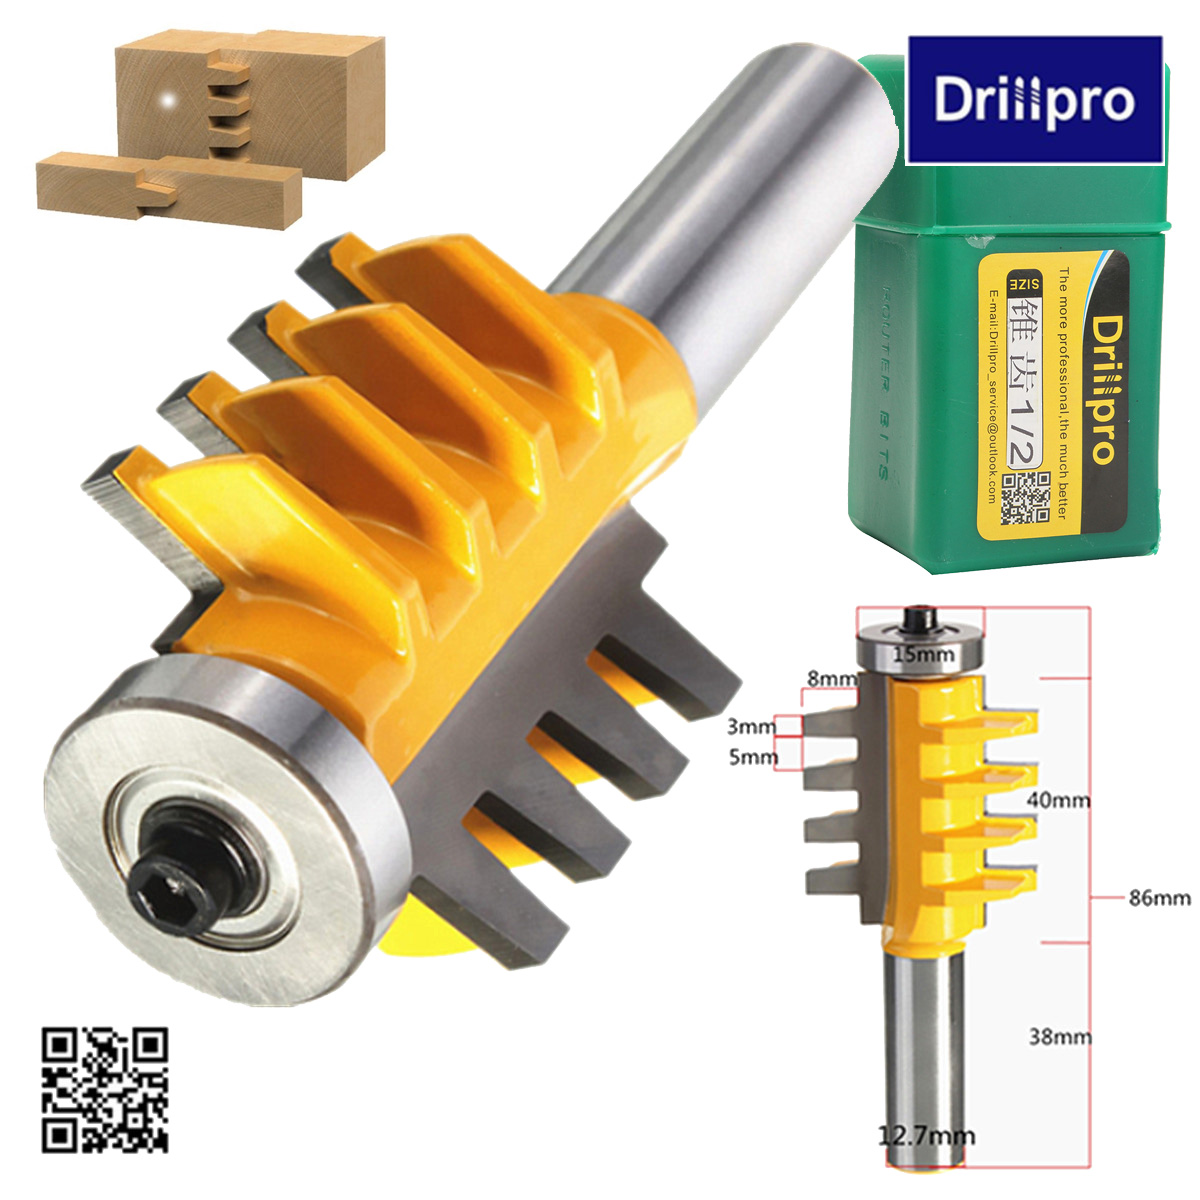 Drillpro Reversible Finger Joint Glue Joint Router Bit - 1/2" Shank Wood Cutter